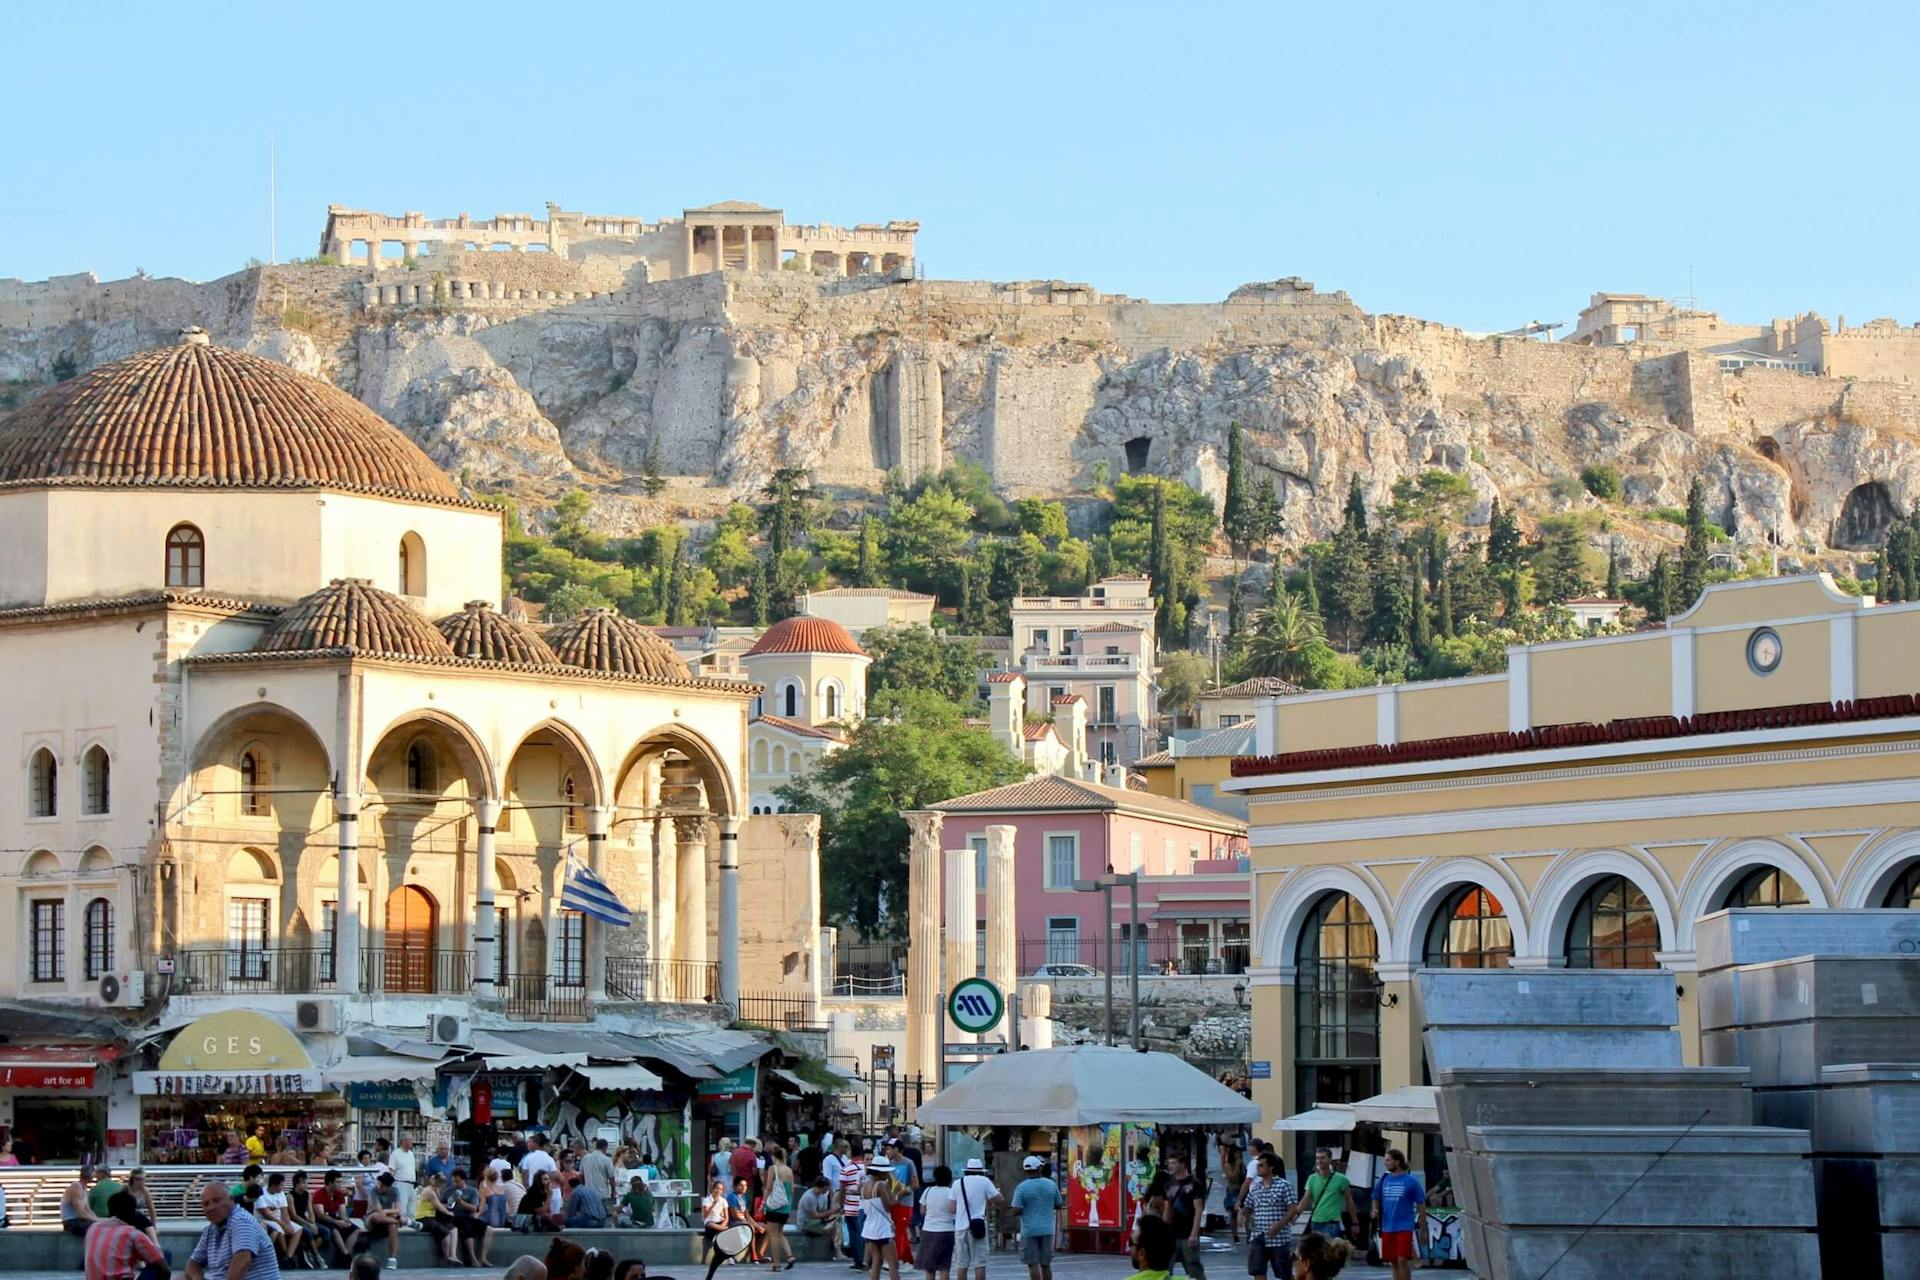 Athens Greece with Acropolis View